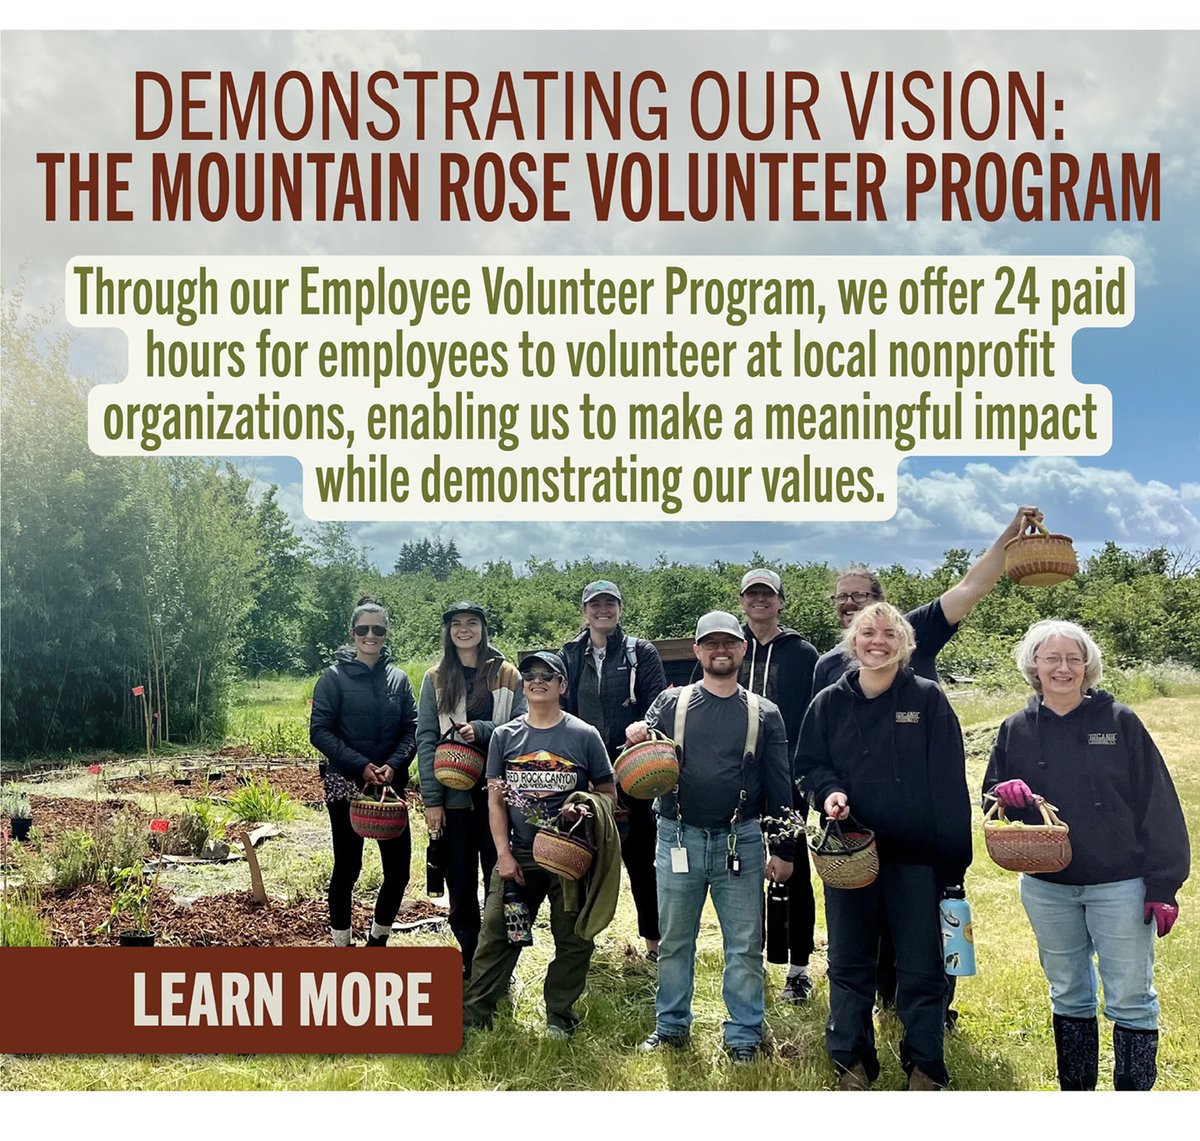 The Mountain Rose Volunteer Program